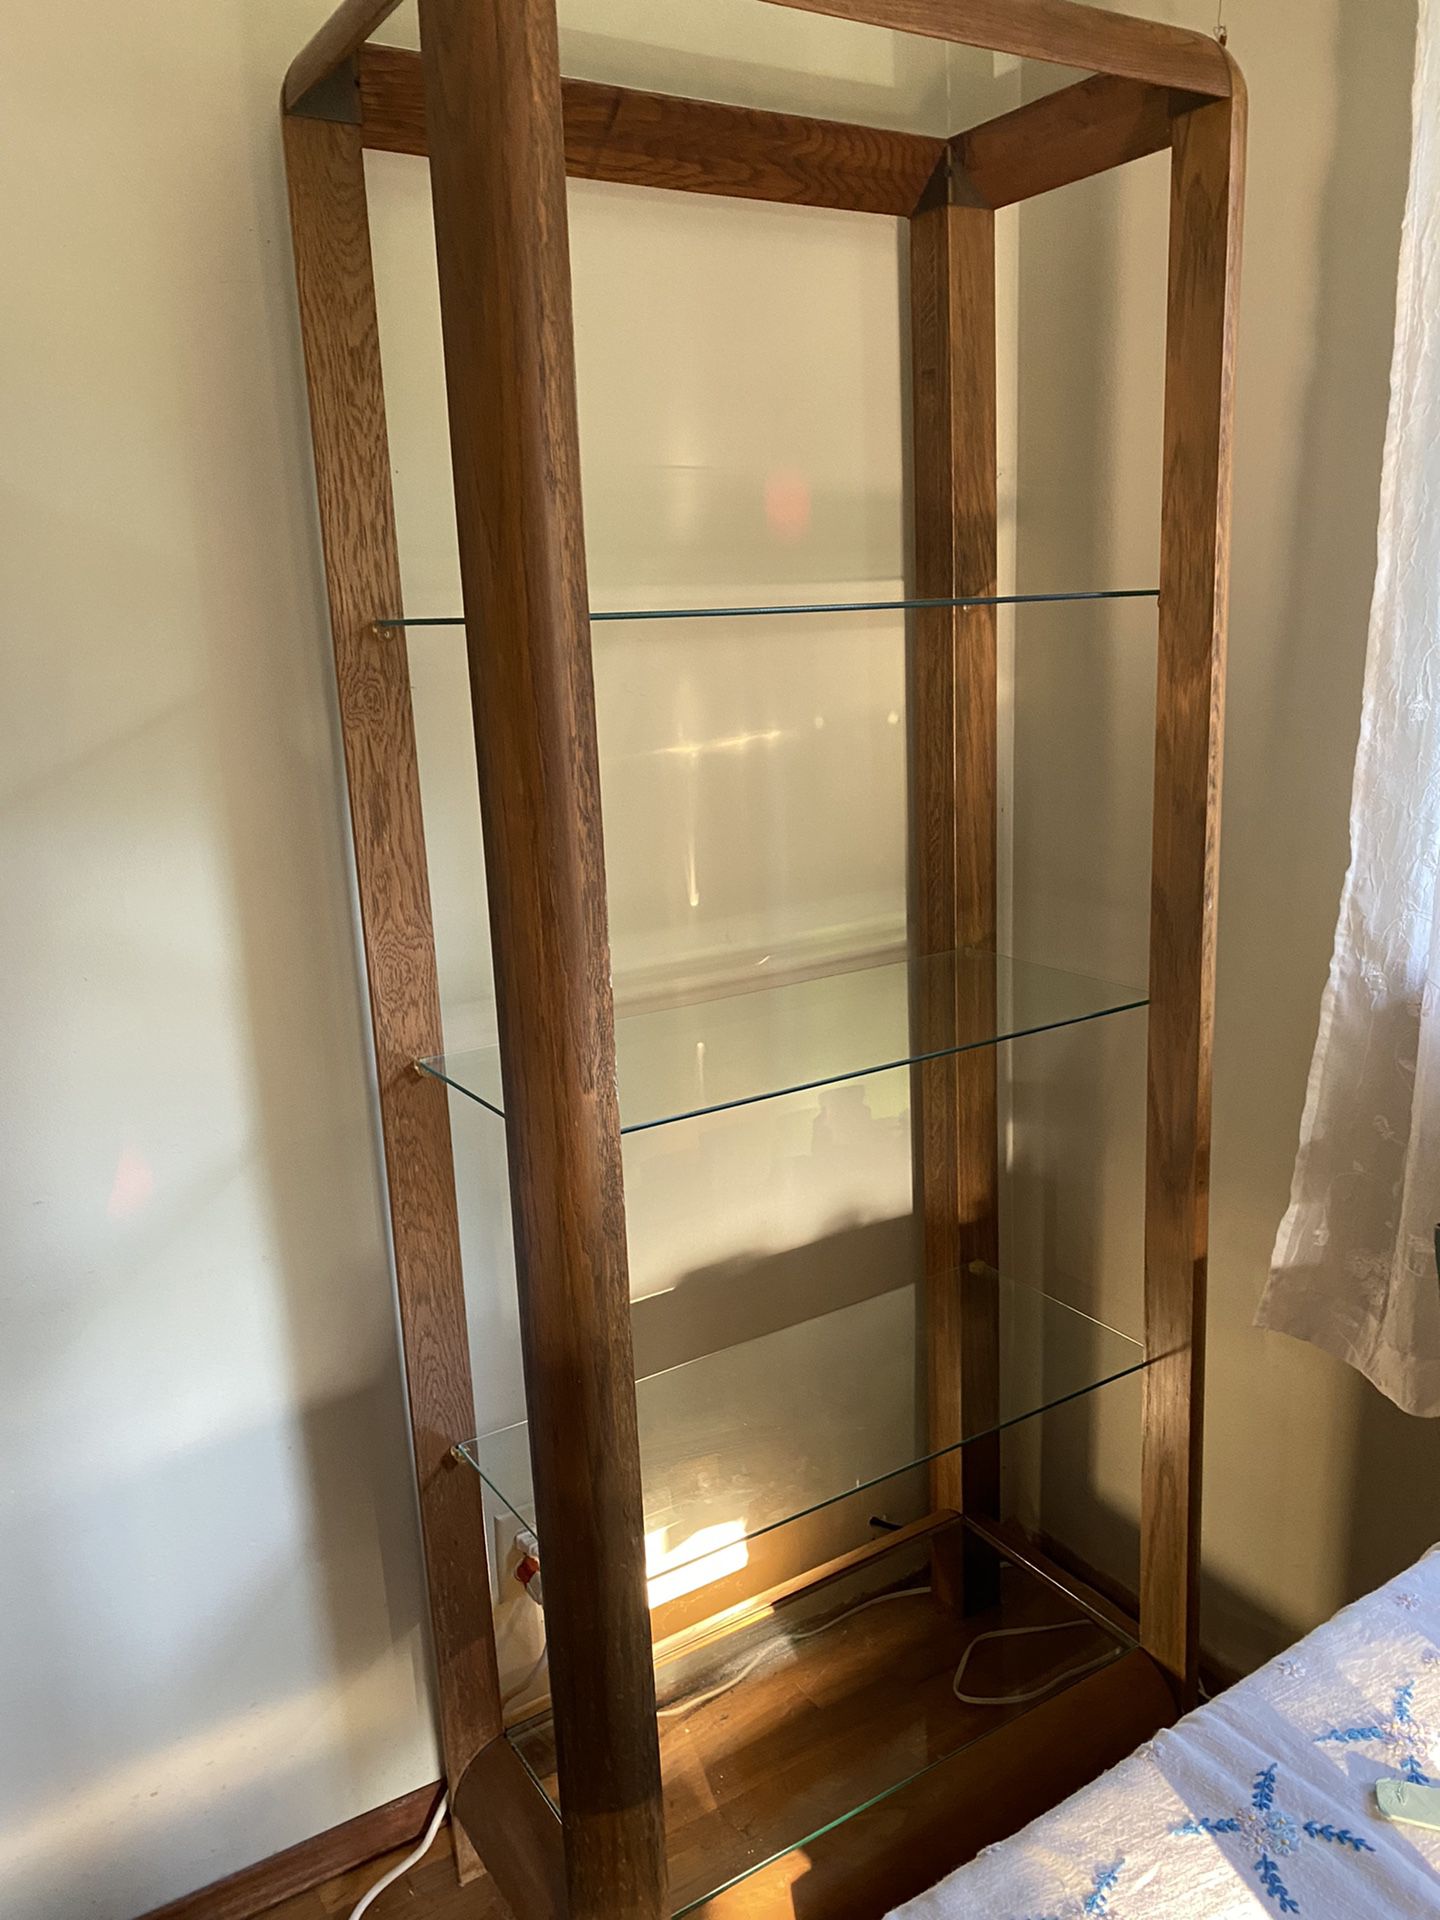 2 Mid Century Wood & Glass Display Shelves  6’x30”x17”